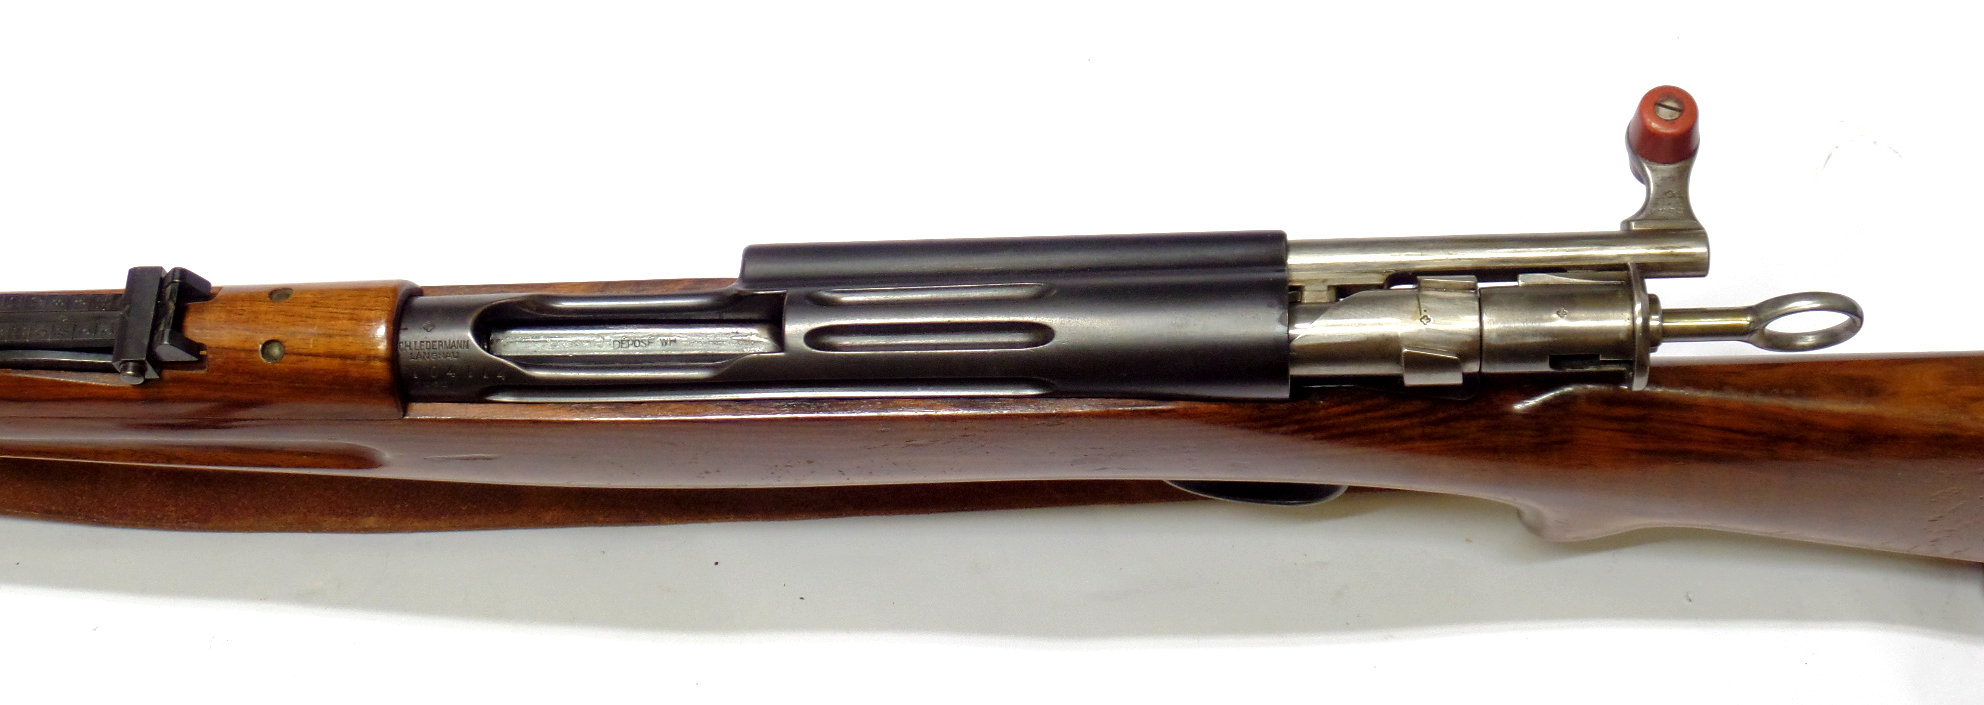 Schmidt Rubin - 96/11 calibre 22LR